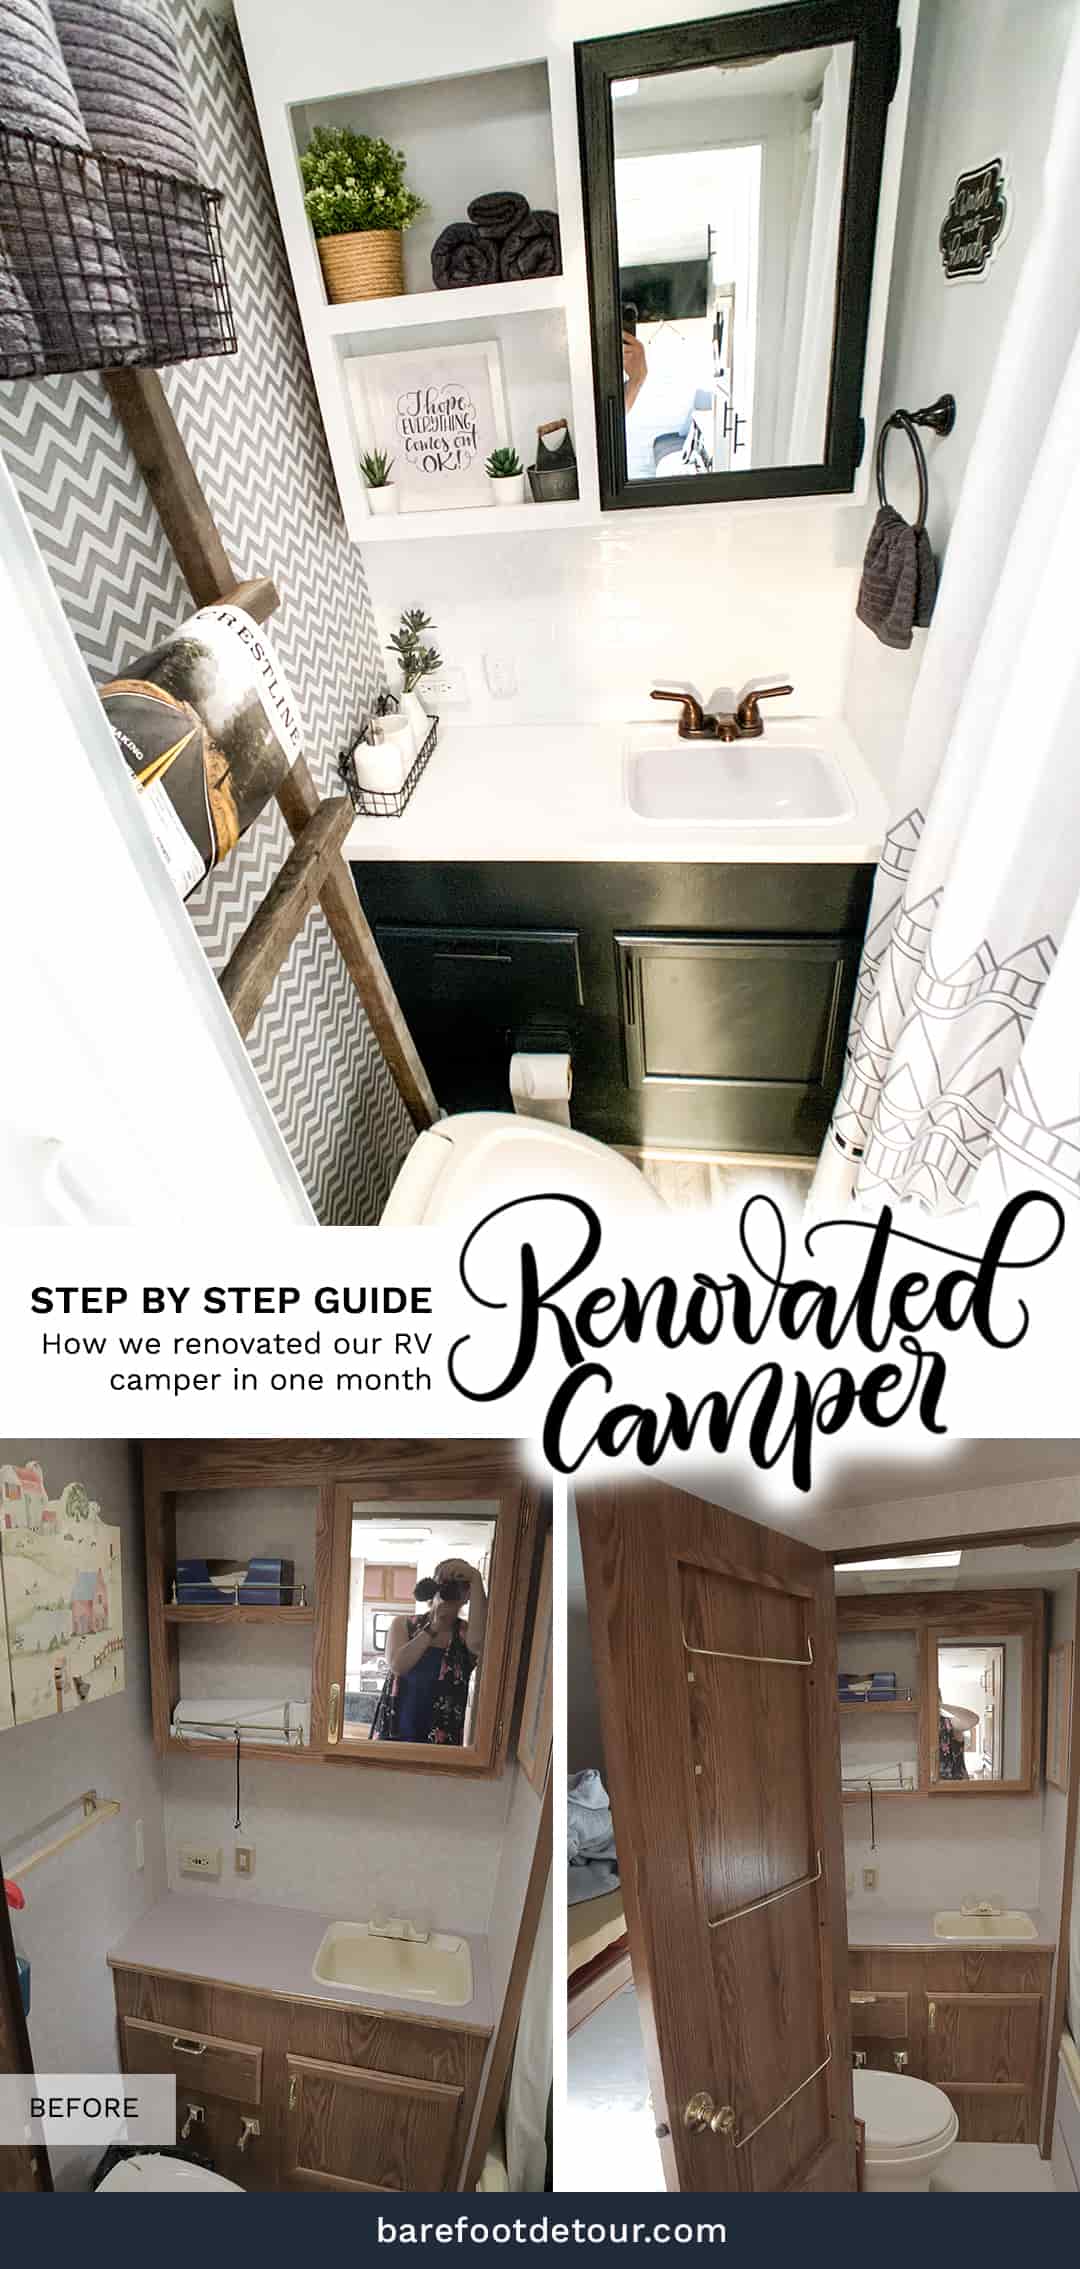 How to renovate a camper